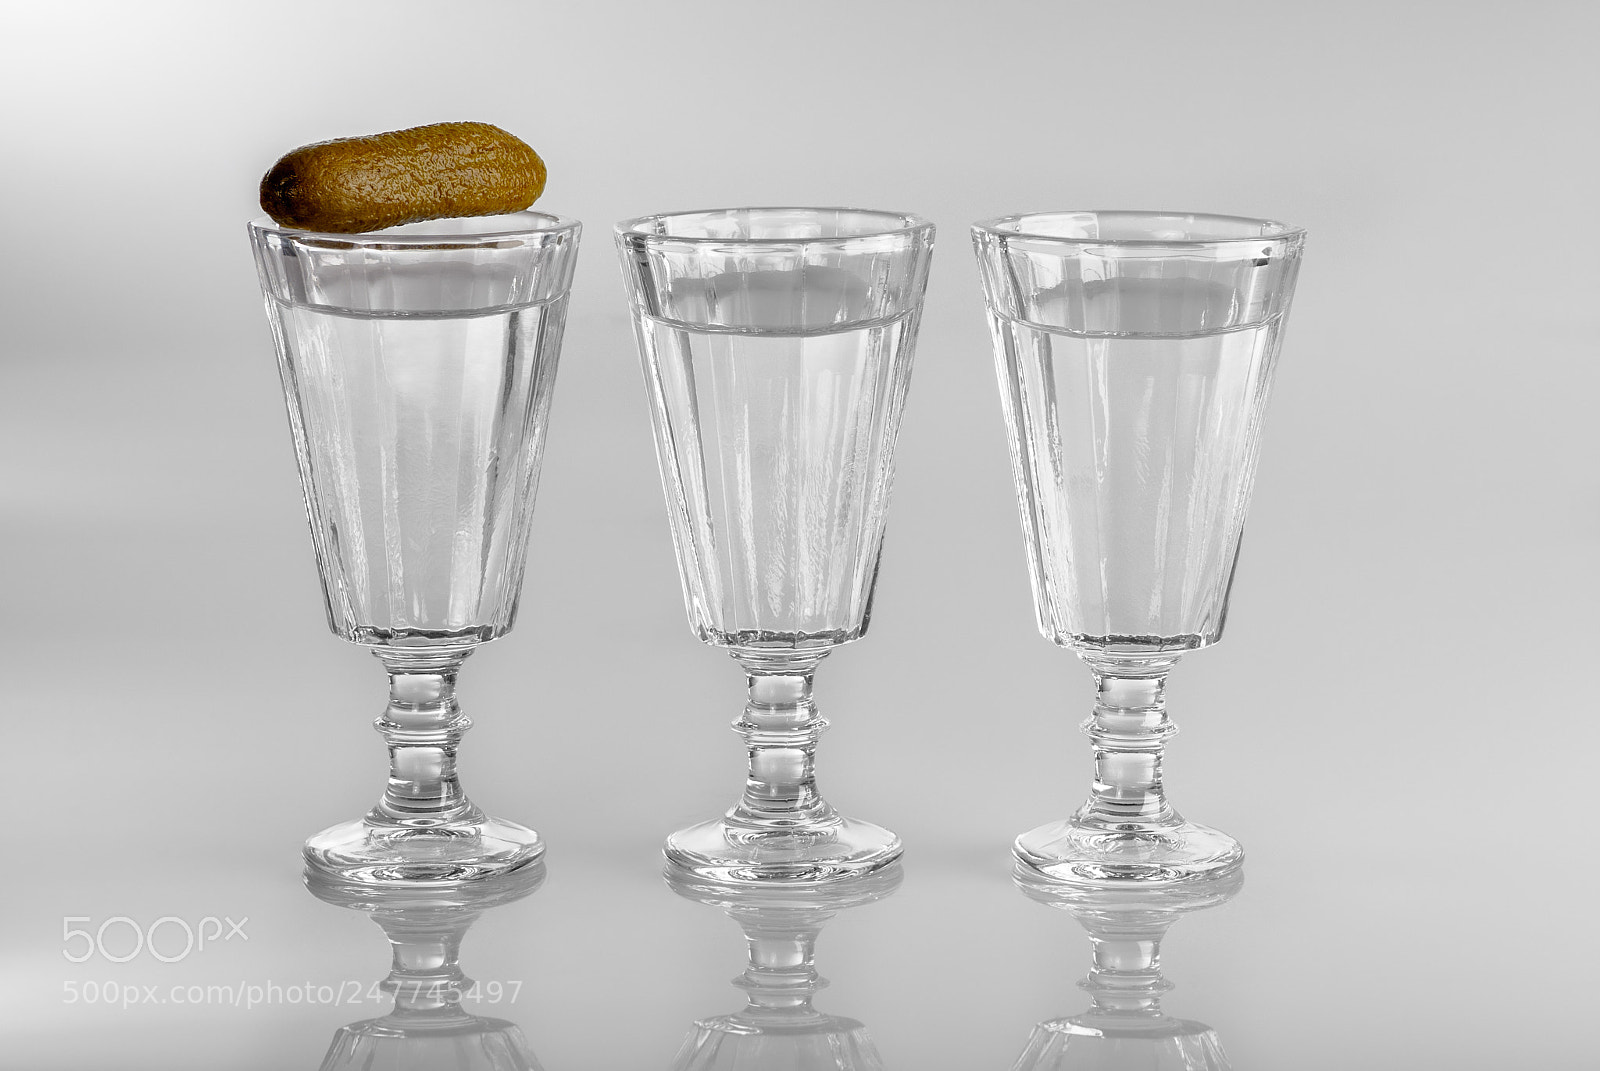 Nikon D200 sample photo. Three glasses of vodka photography